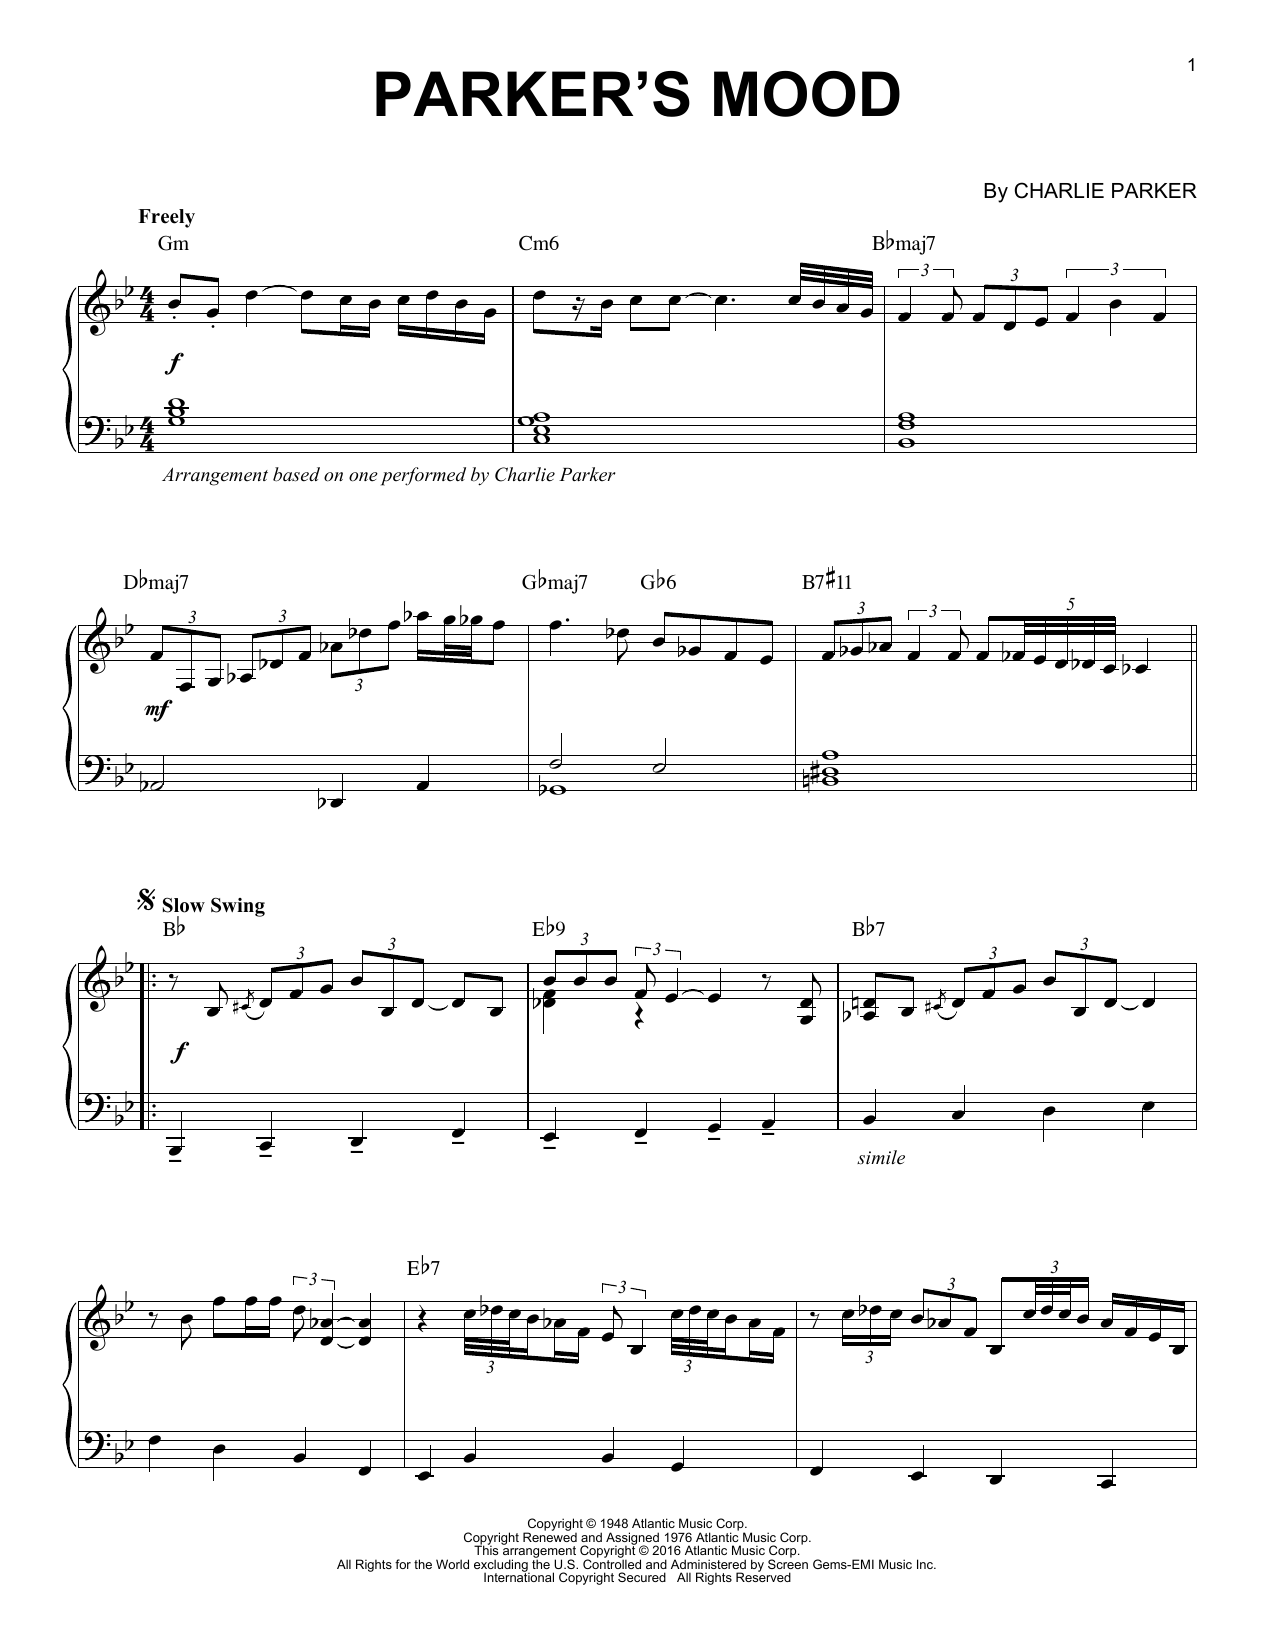 Charlie Parker Parker's Mood (arr. Brent Edstrom) Sheet Music Notes & Chords for Piano - Download or Print PDF